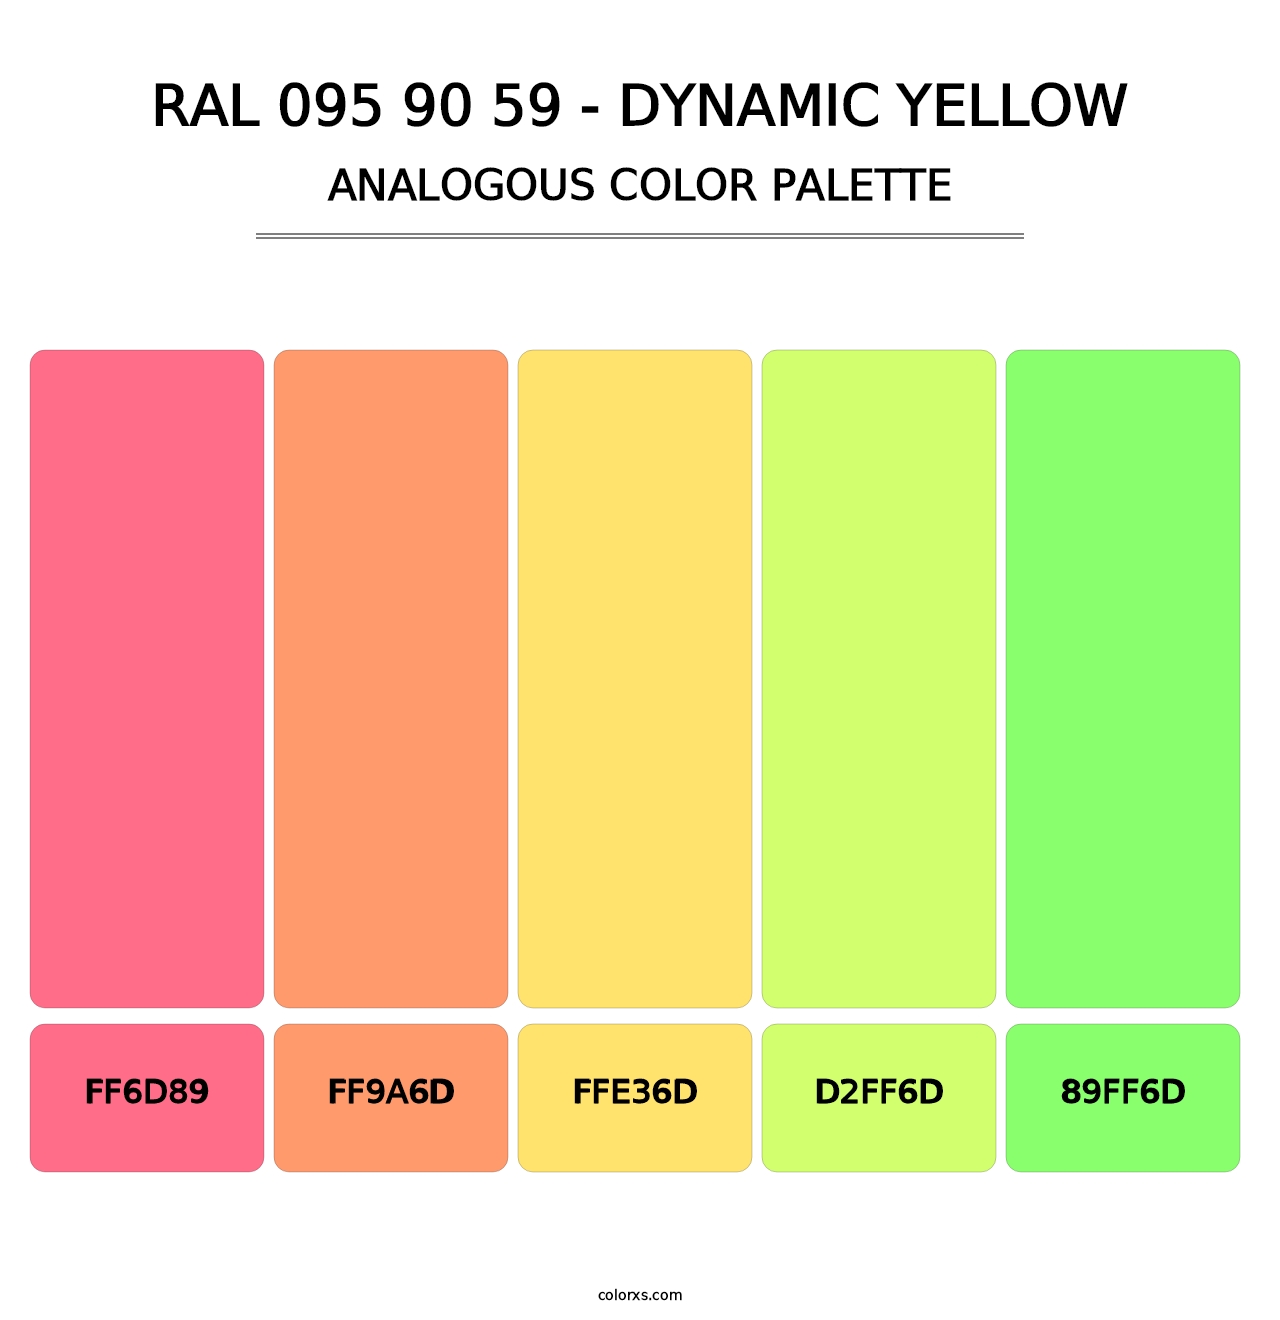 RAL 095 90 59 - Dynamic Yellow - Analogous Color Palette